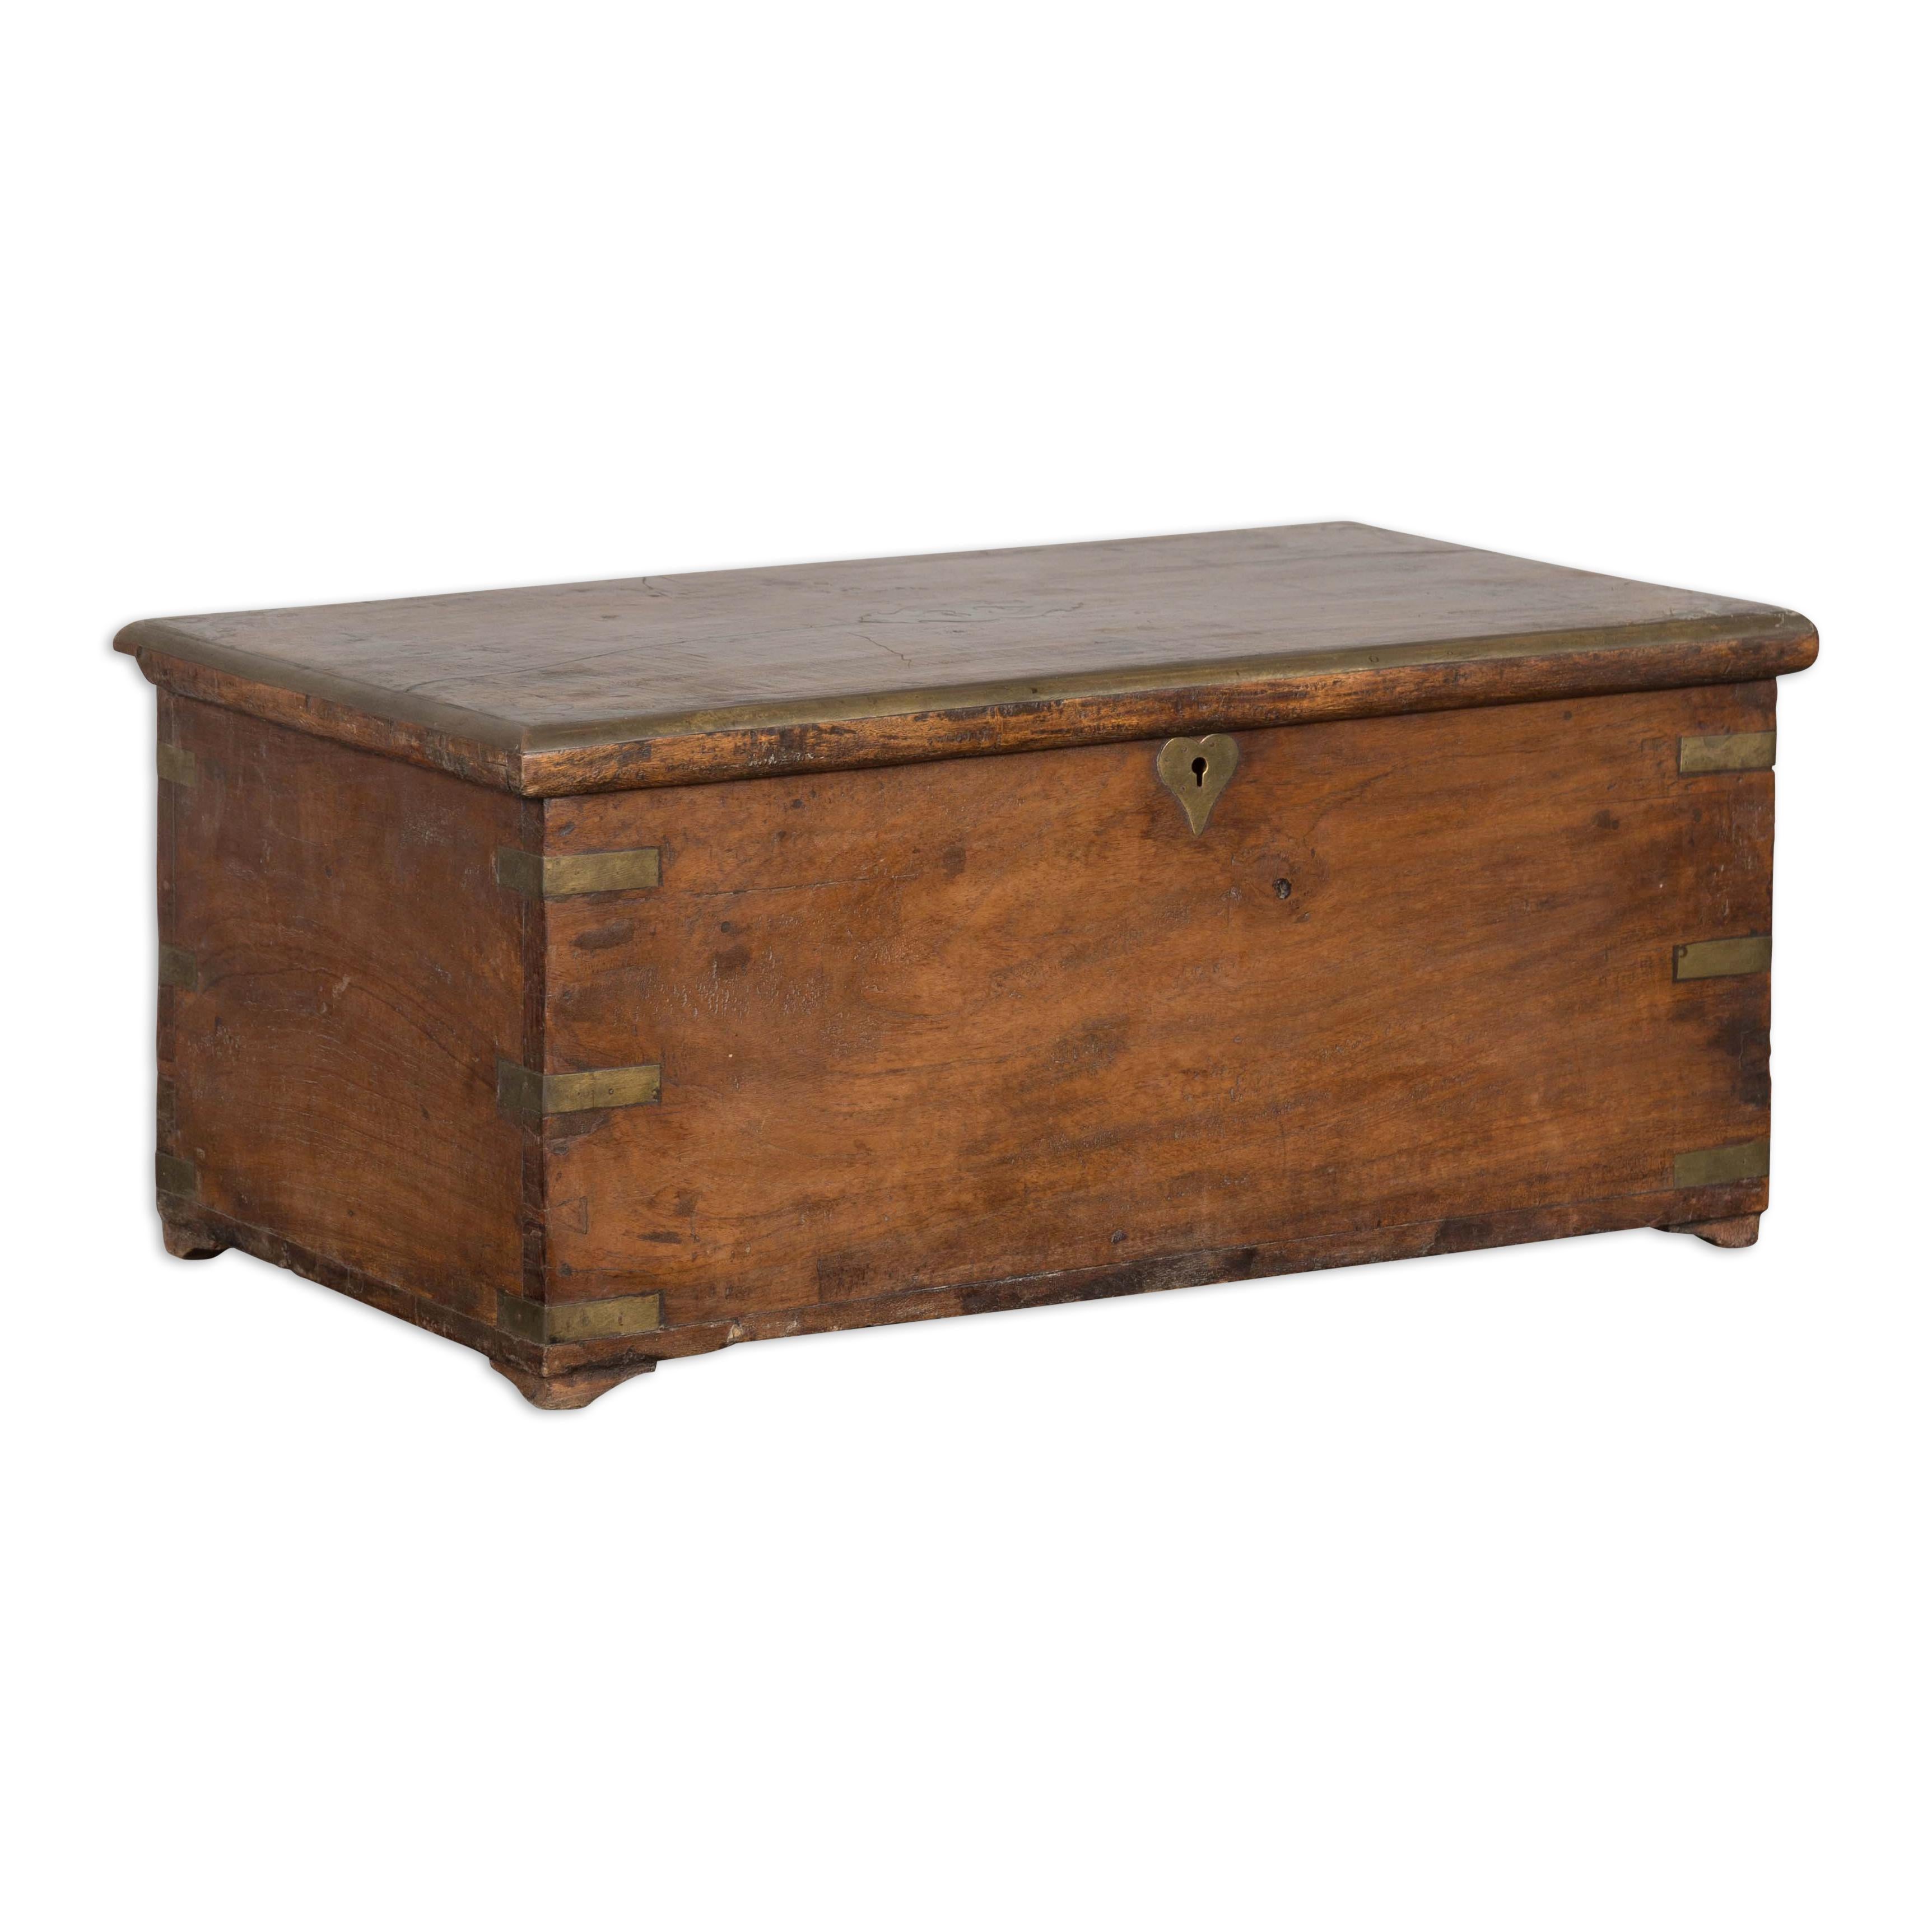 19th Century Rectangular Antique Wooden Storage Chest For Sale 15